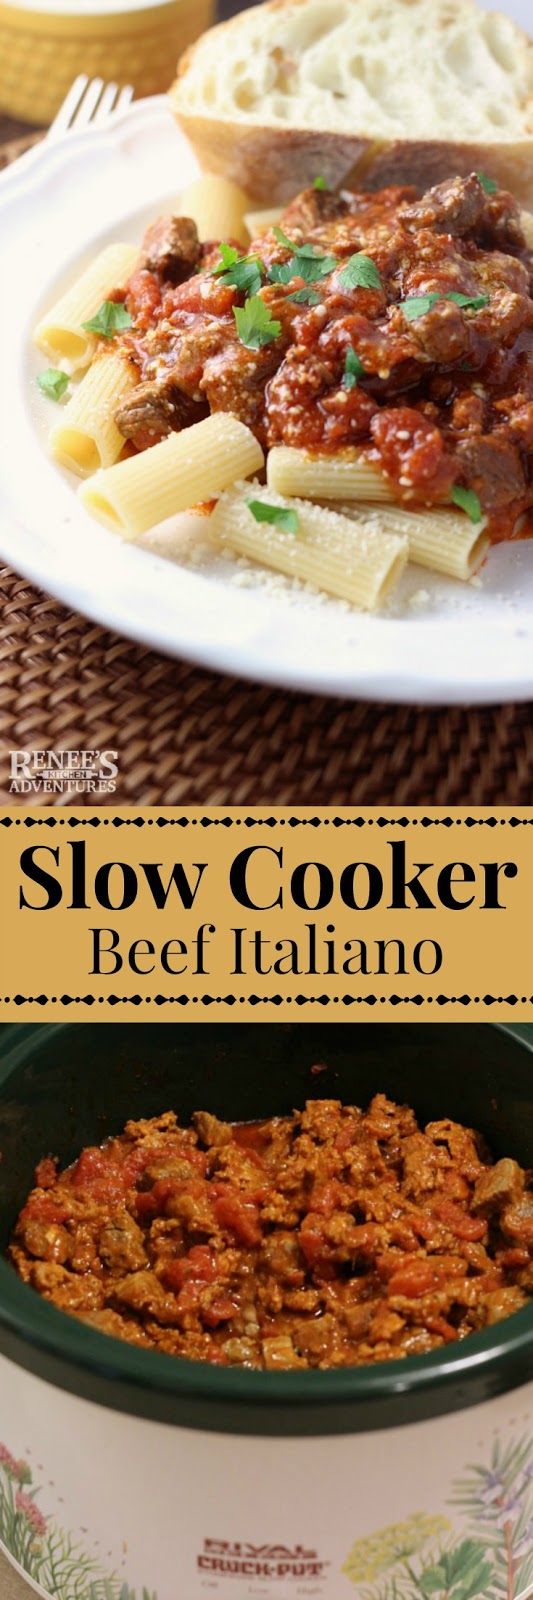 Slow Cooker Beef Italiano